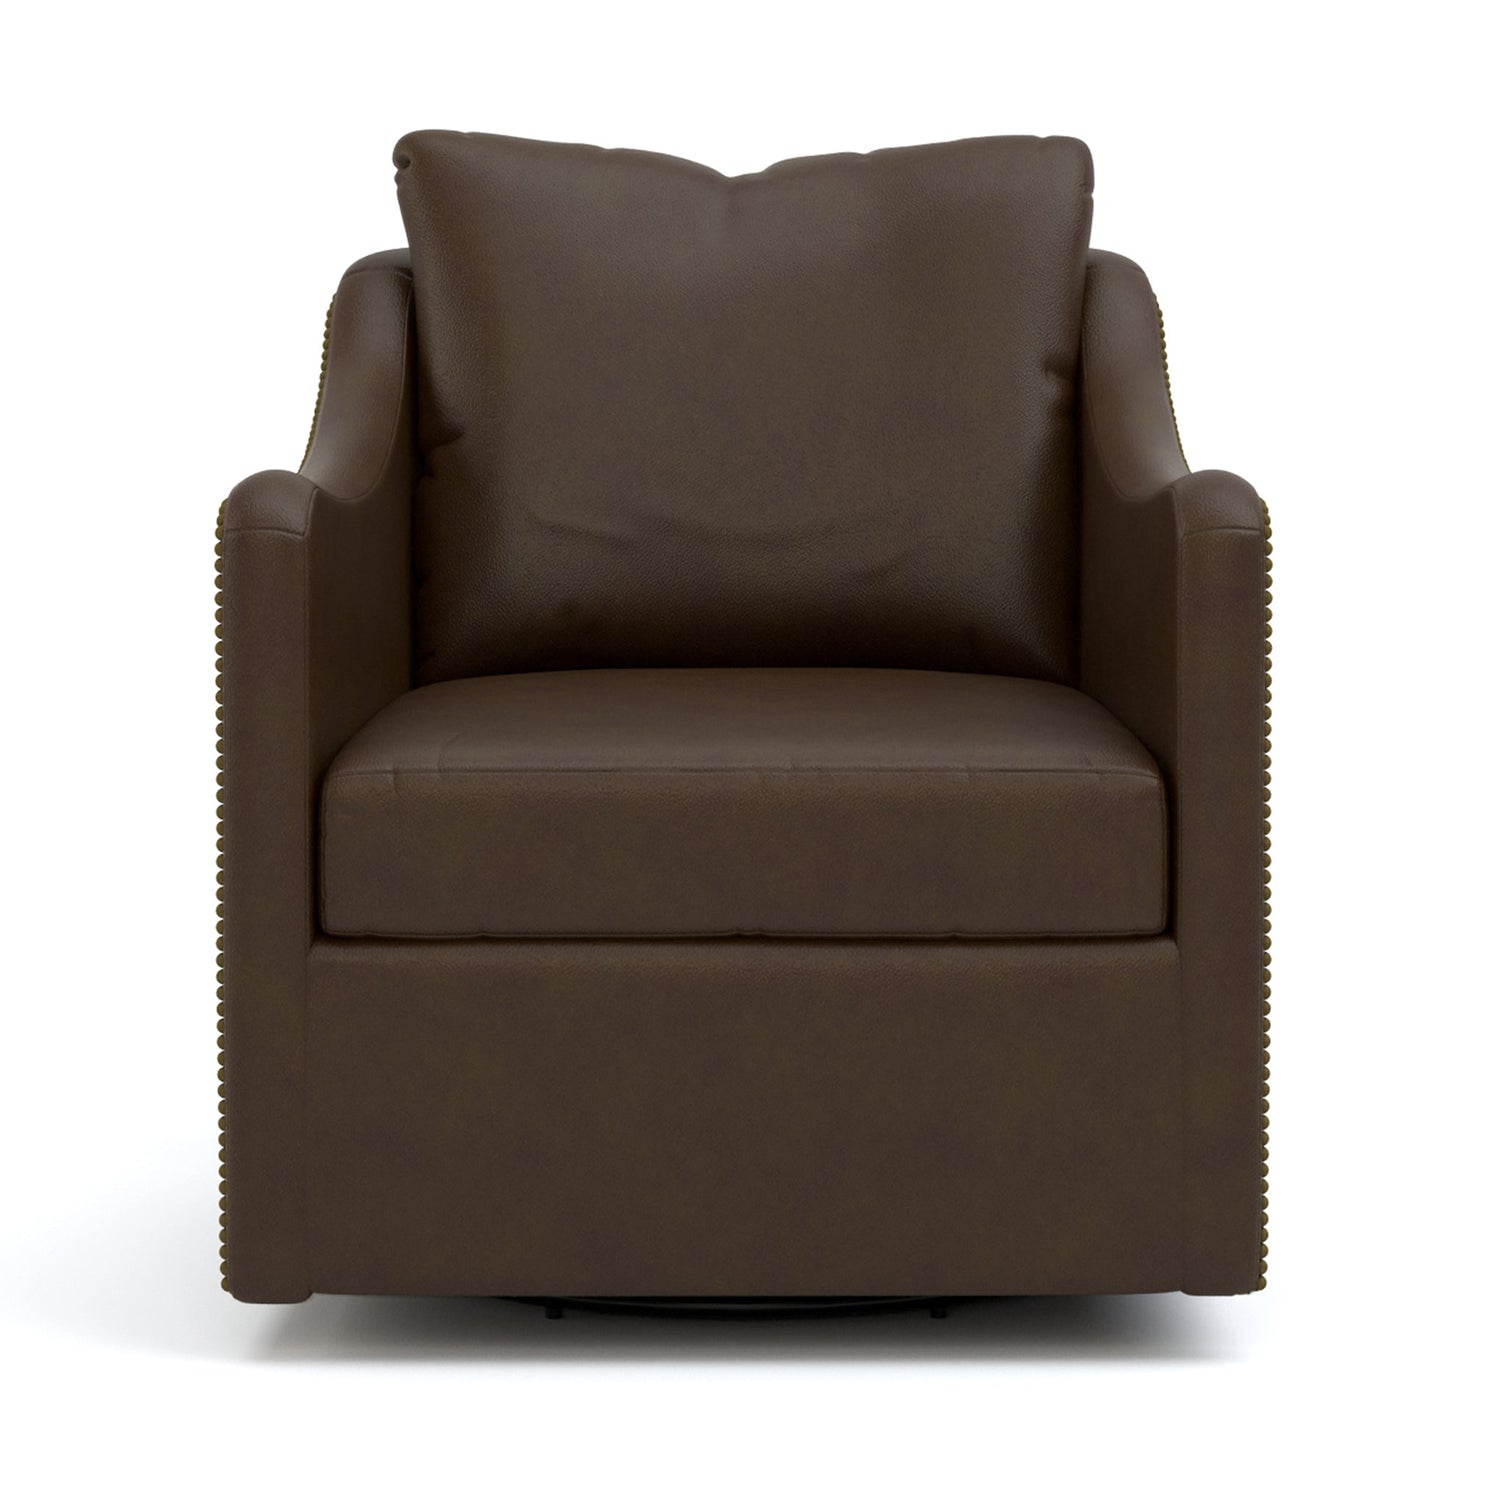 Maidstone Swivel Chair in Weston Truffle leather